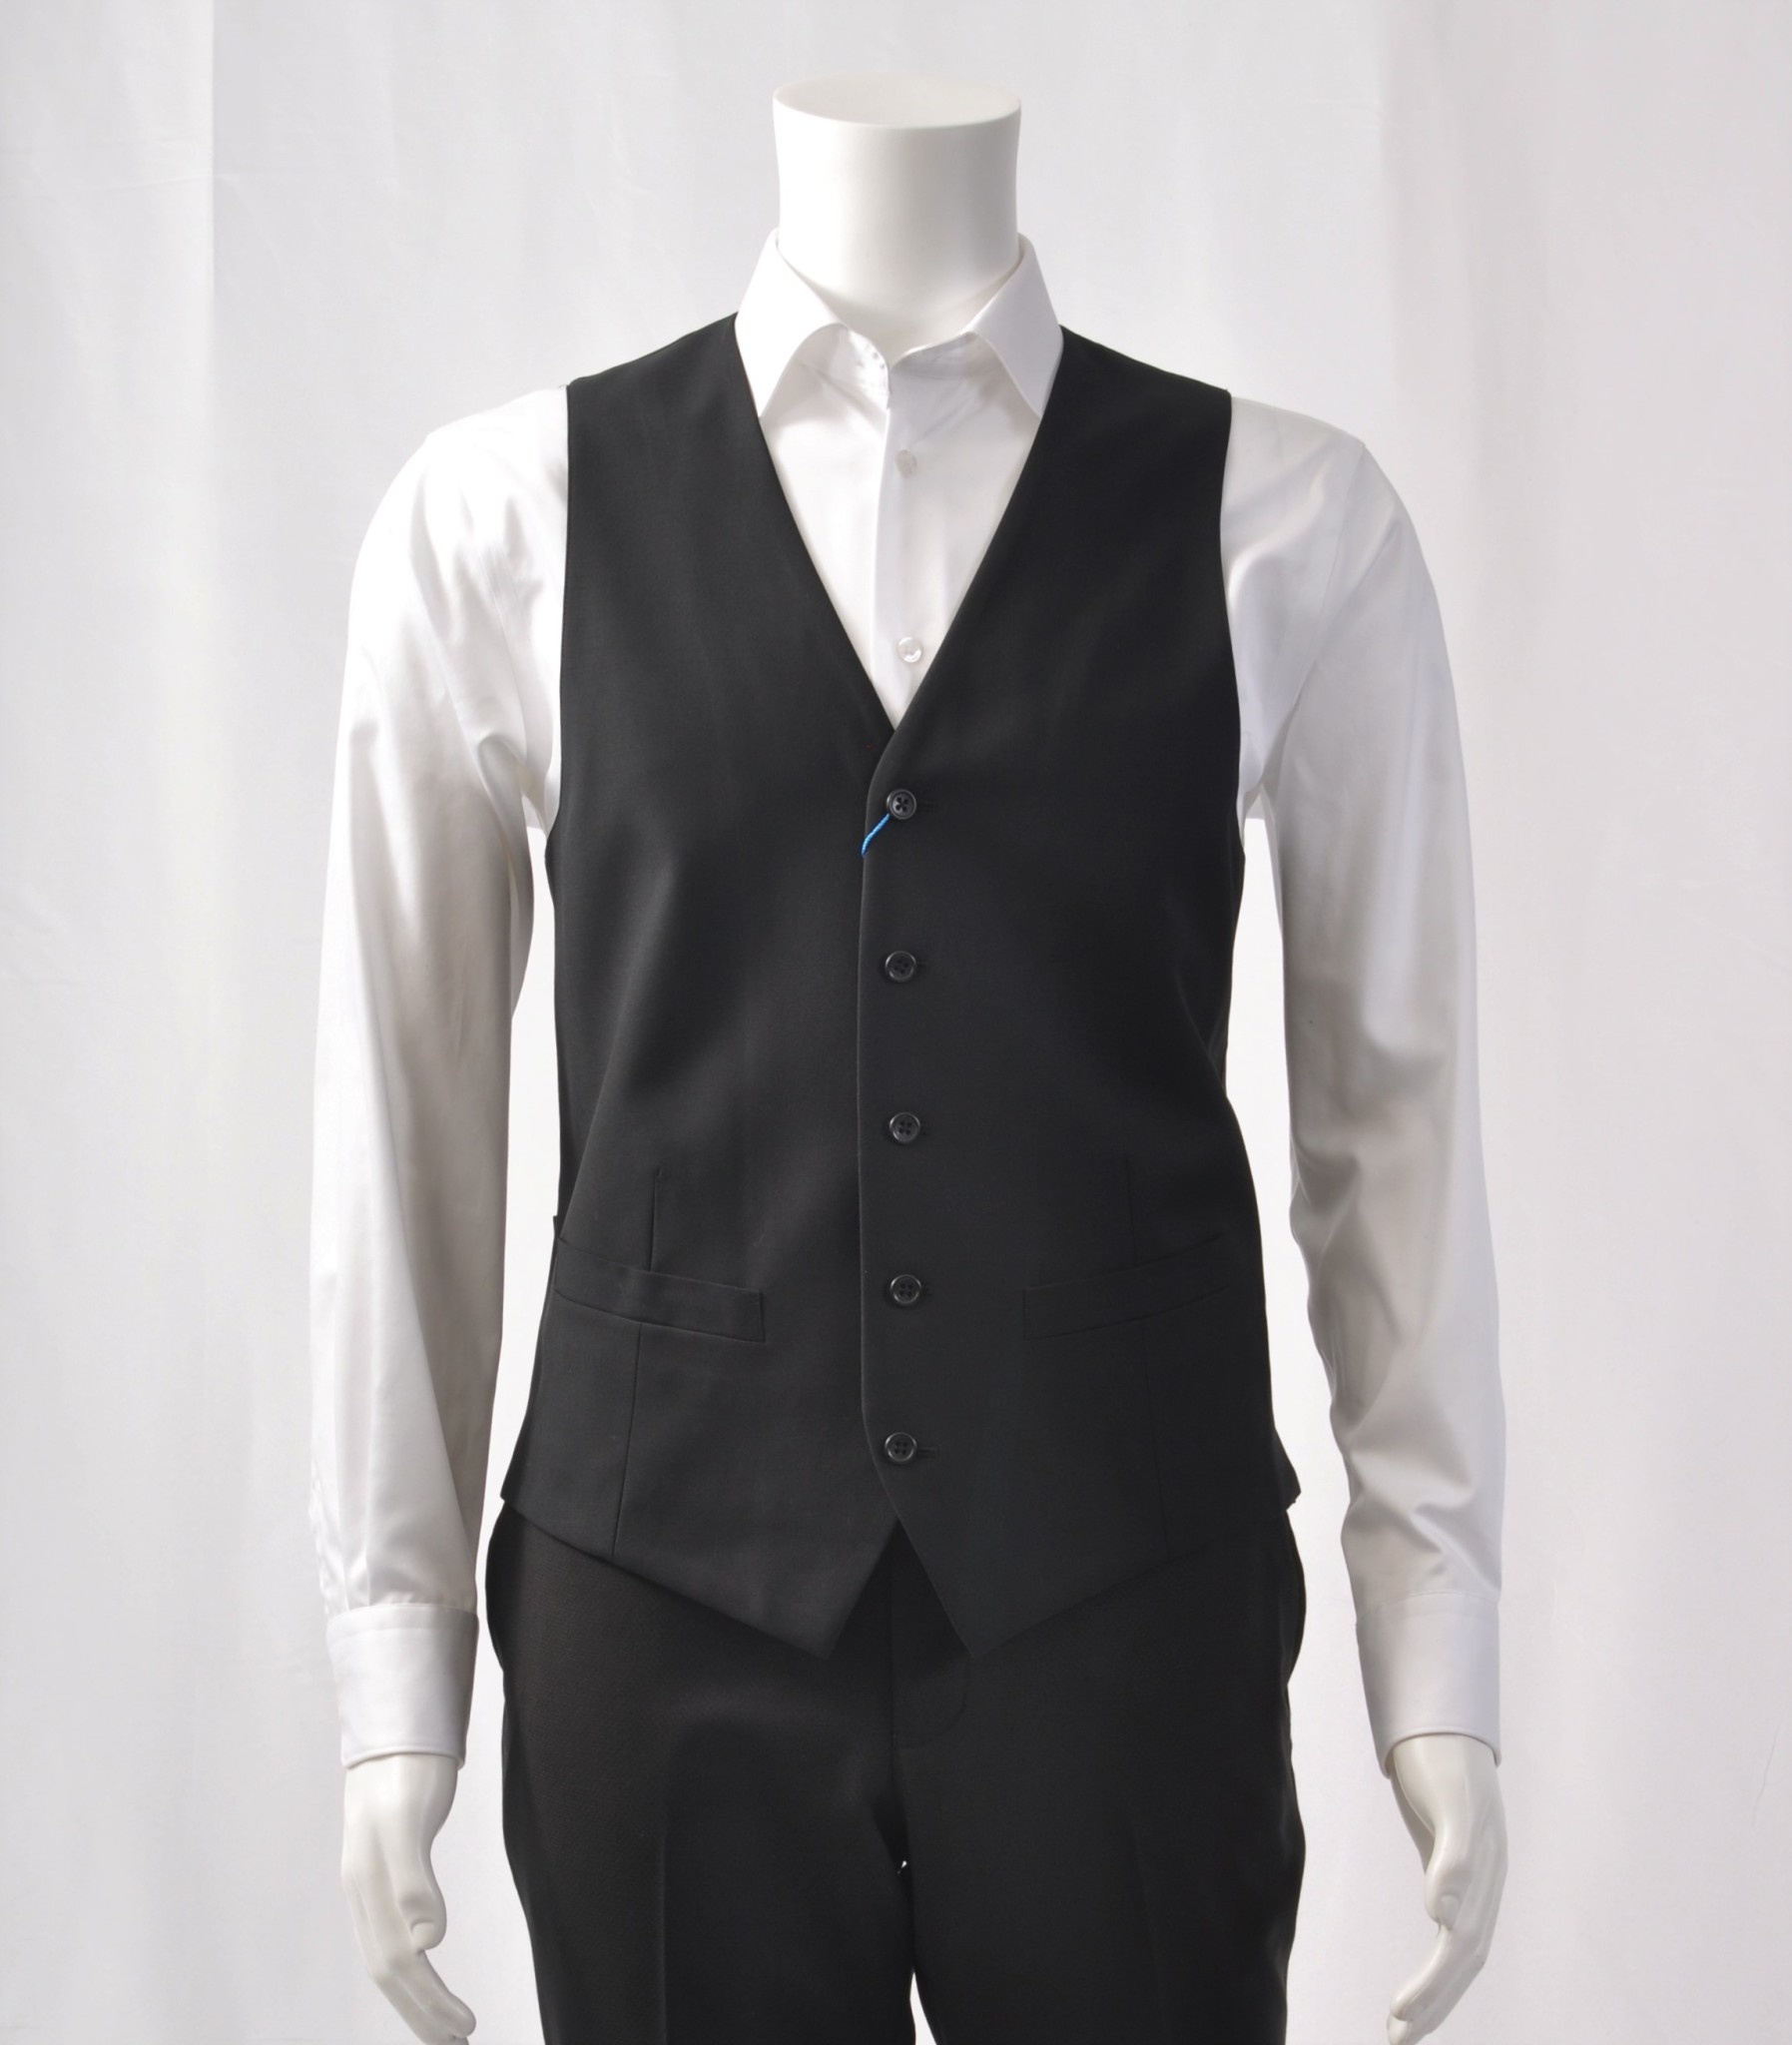 Buy online Black Solid Vest from Innerwear for Men by Friskers for